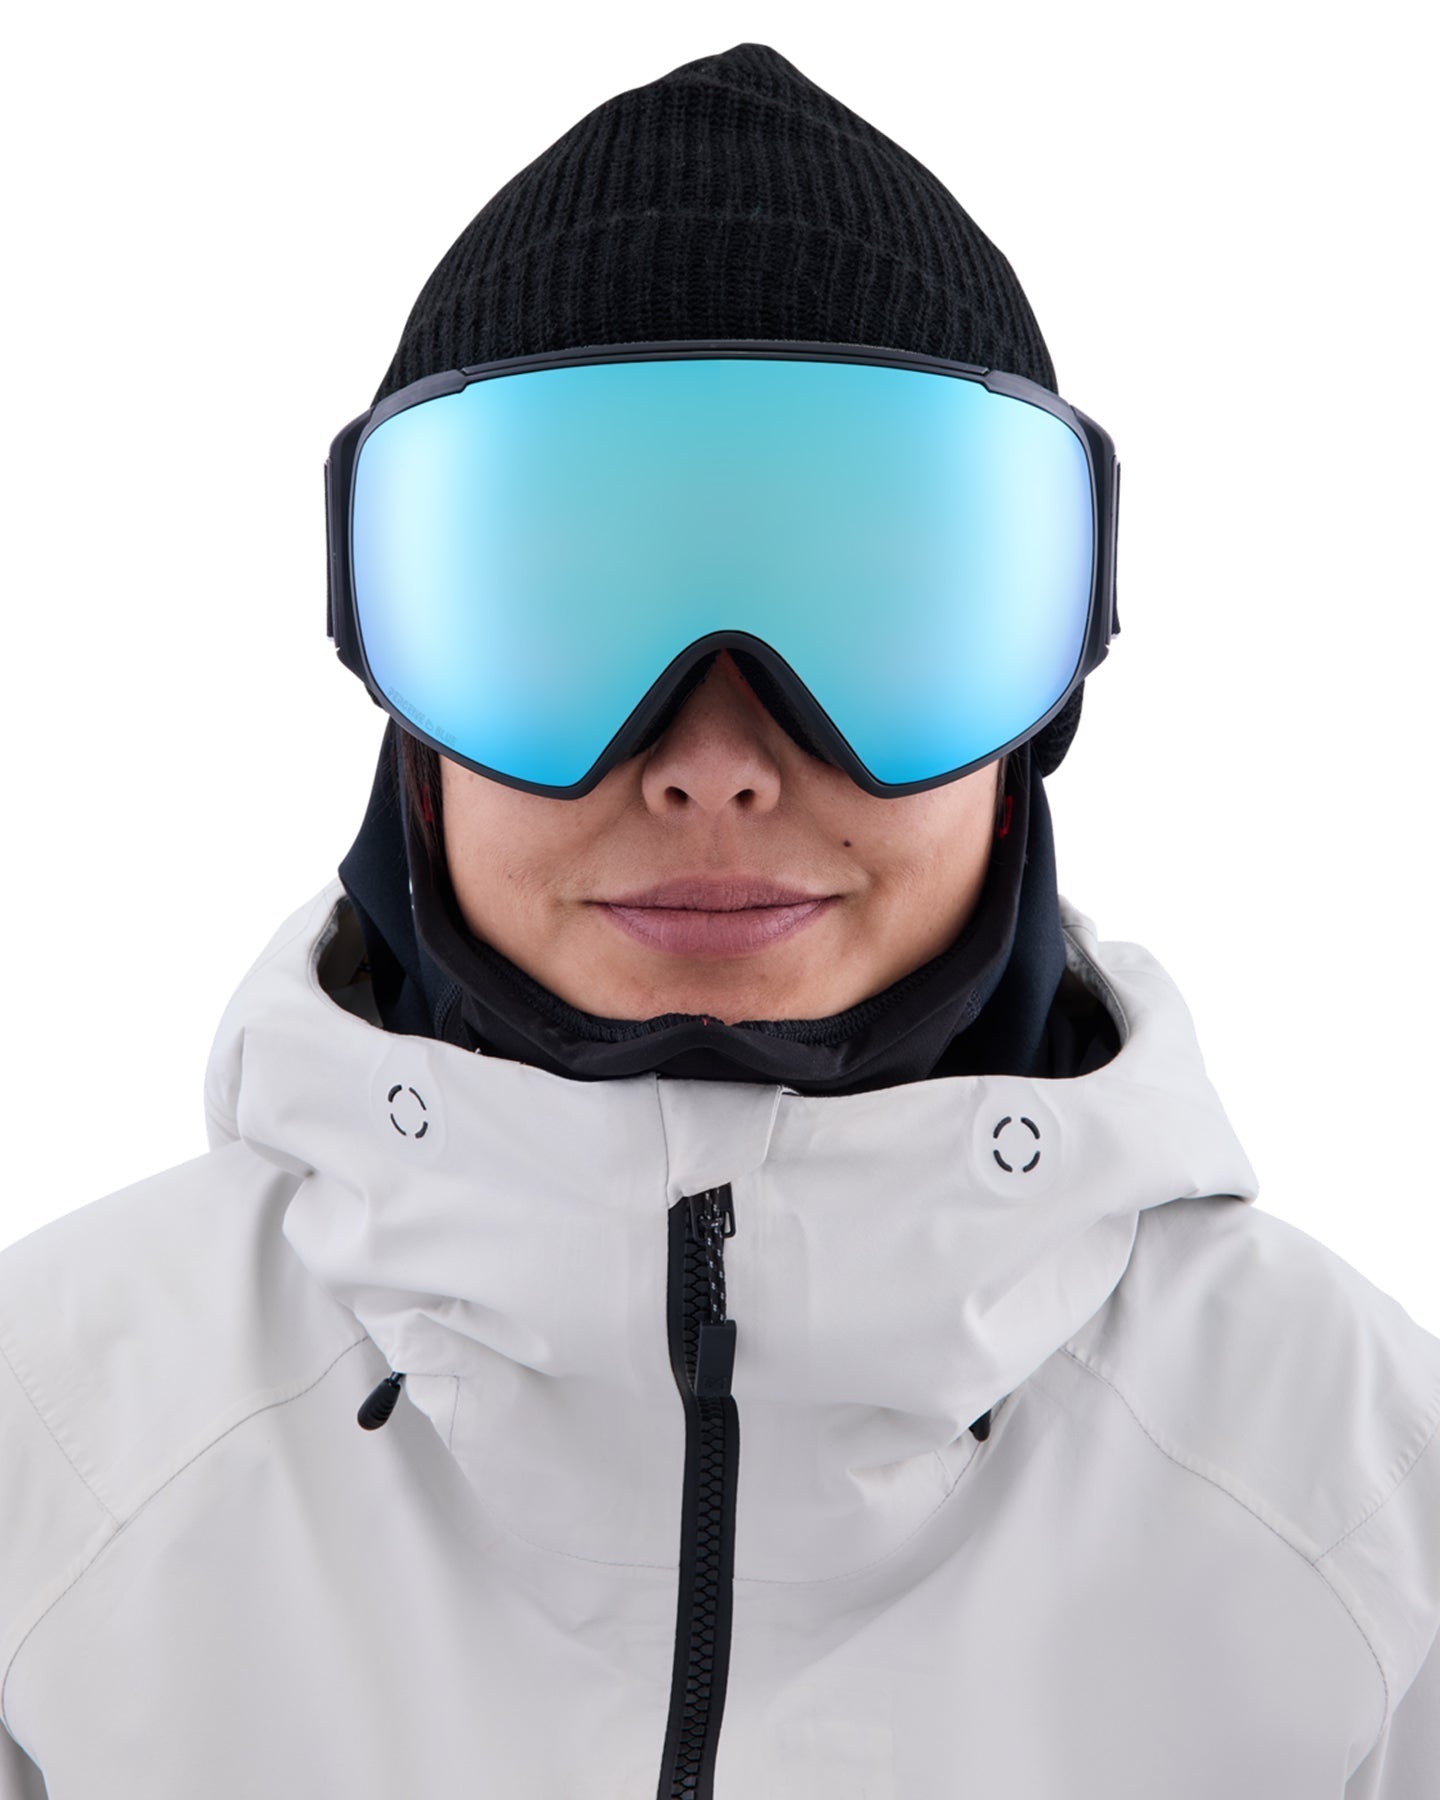 Anon M4S Toric Low Bridge Fit Snow Goggles + Bonus Lens + MFI - Black / Perceive Variable Blue Men's Snow Goggles - SnowSkiersWarehouse